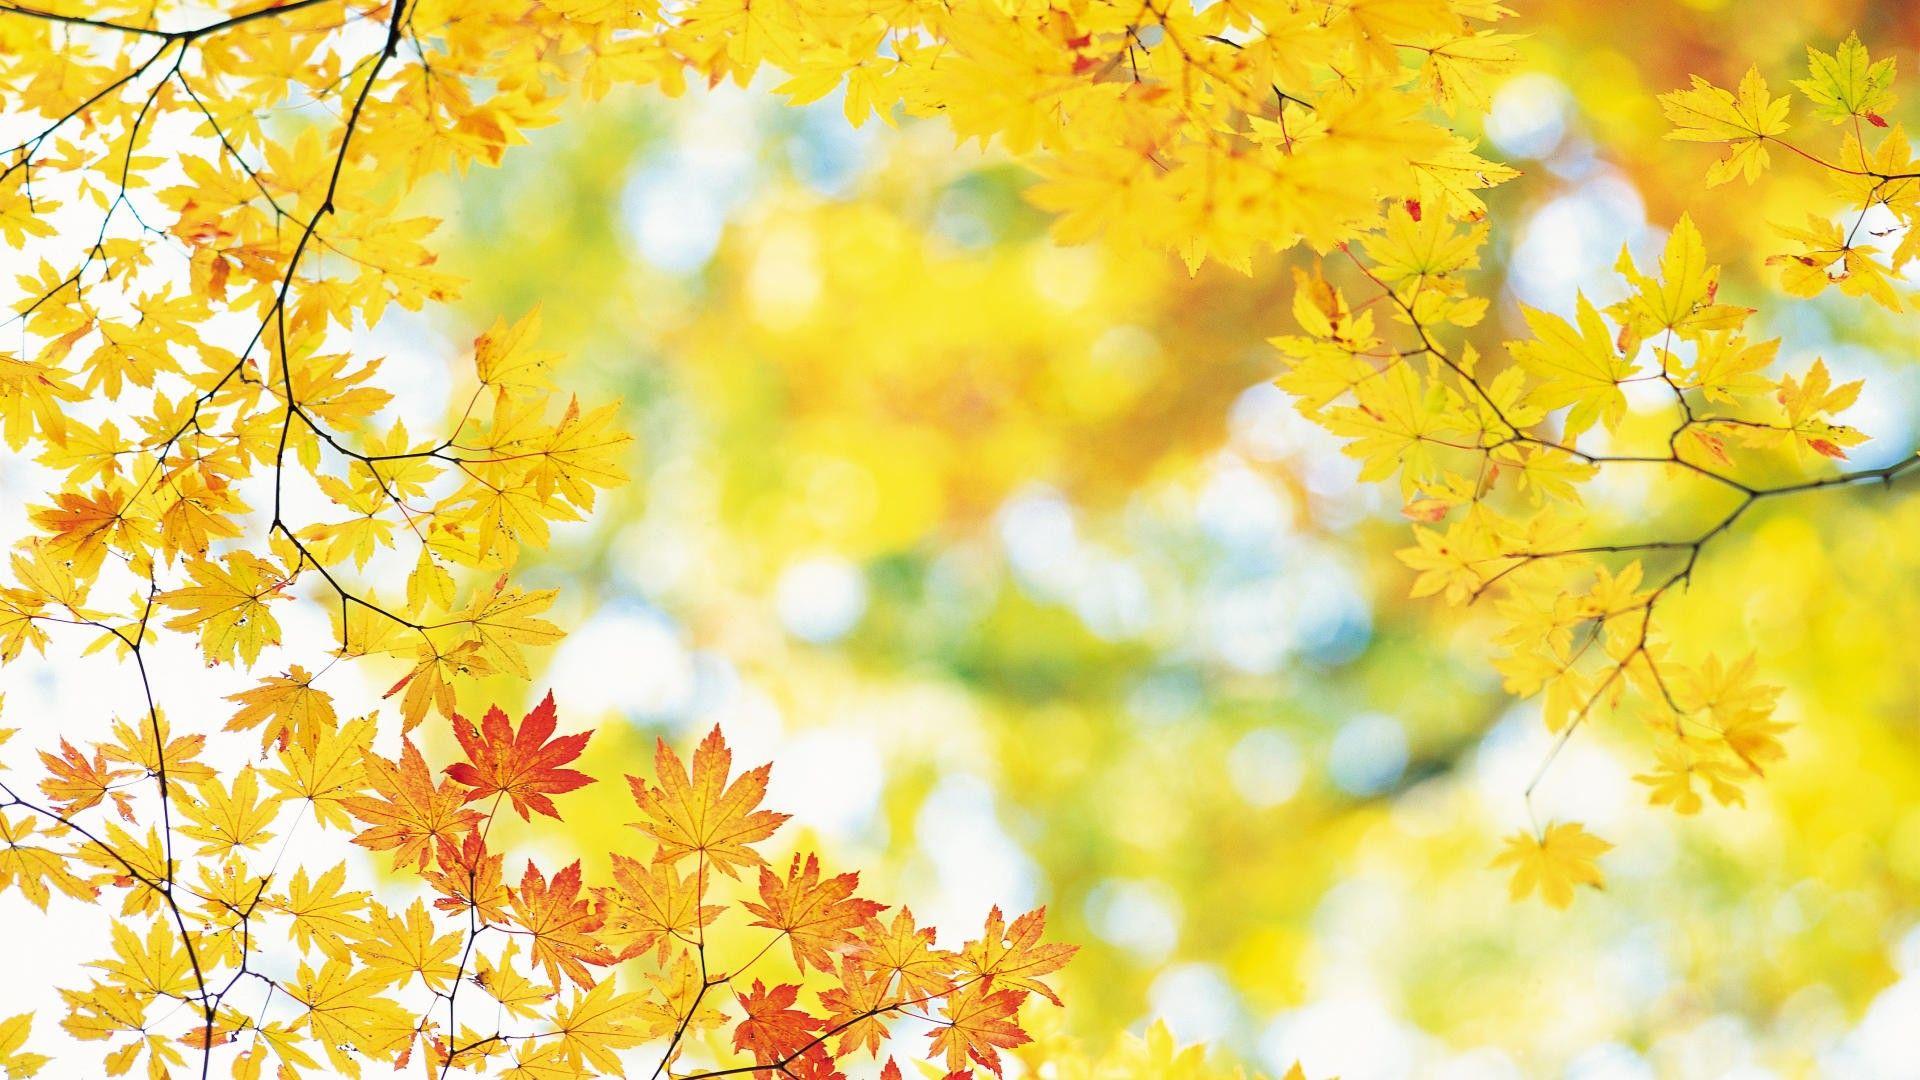 Autumn Yellow Leaves 2018 Wallpaper